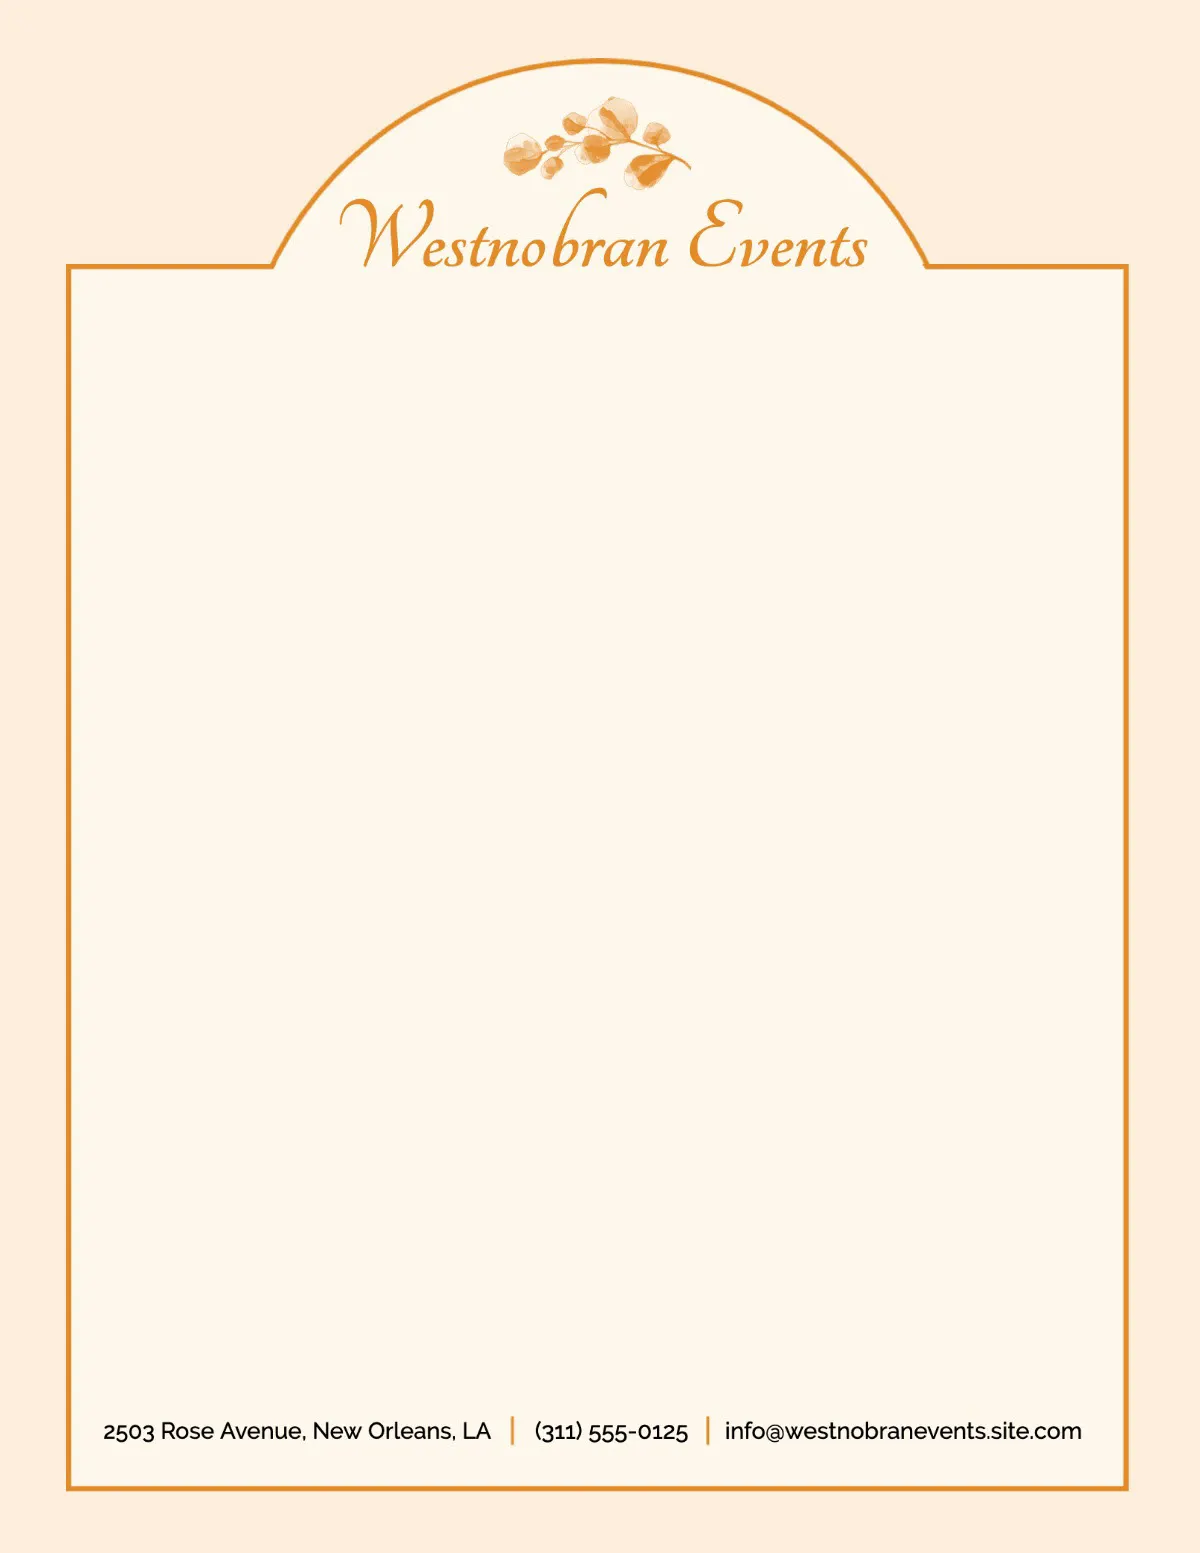 Orange & Cream Events Letterhead